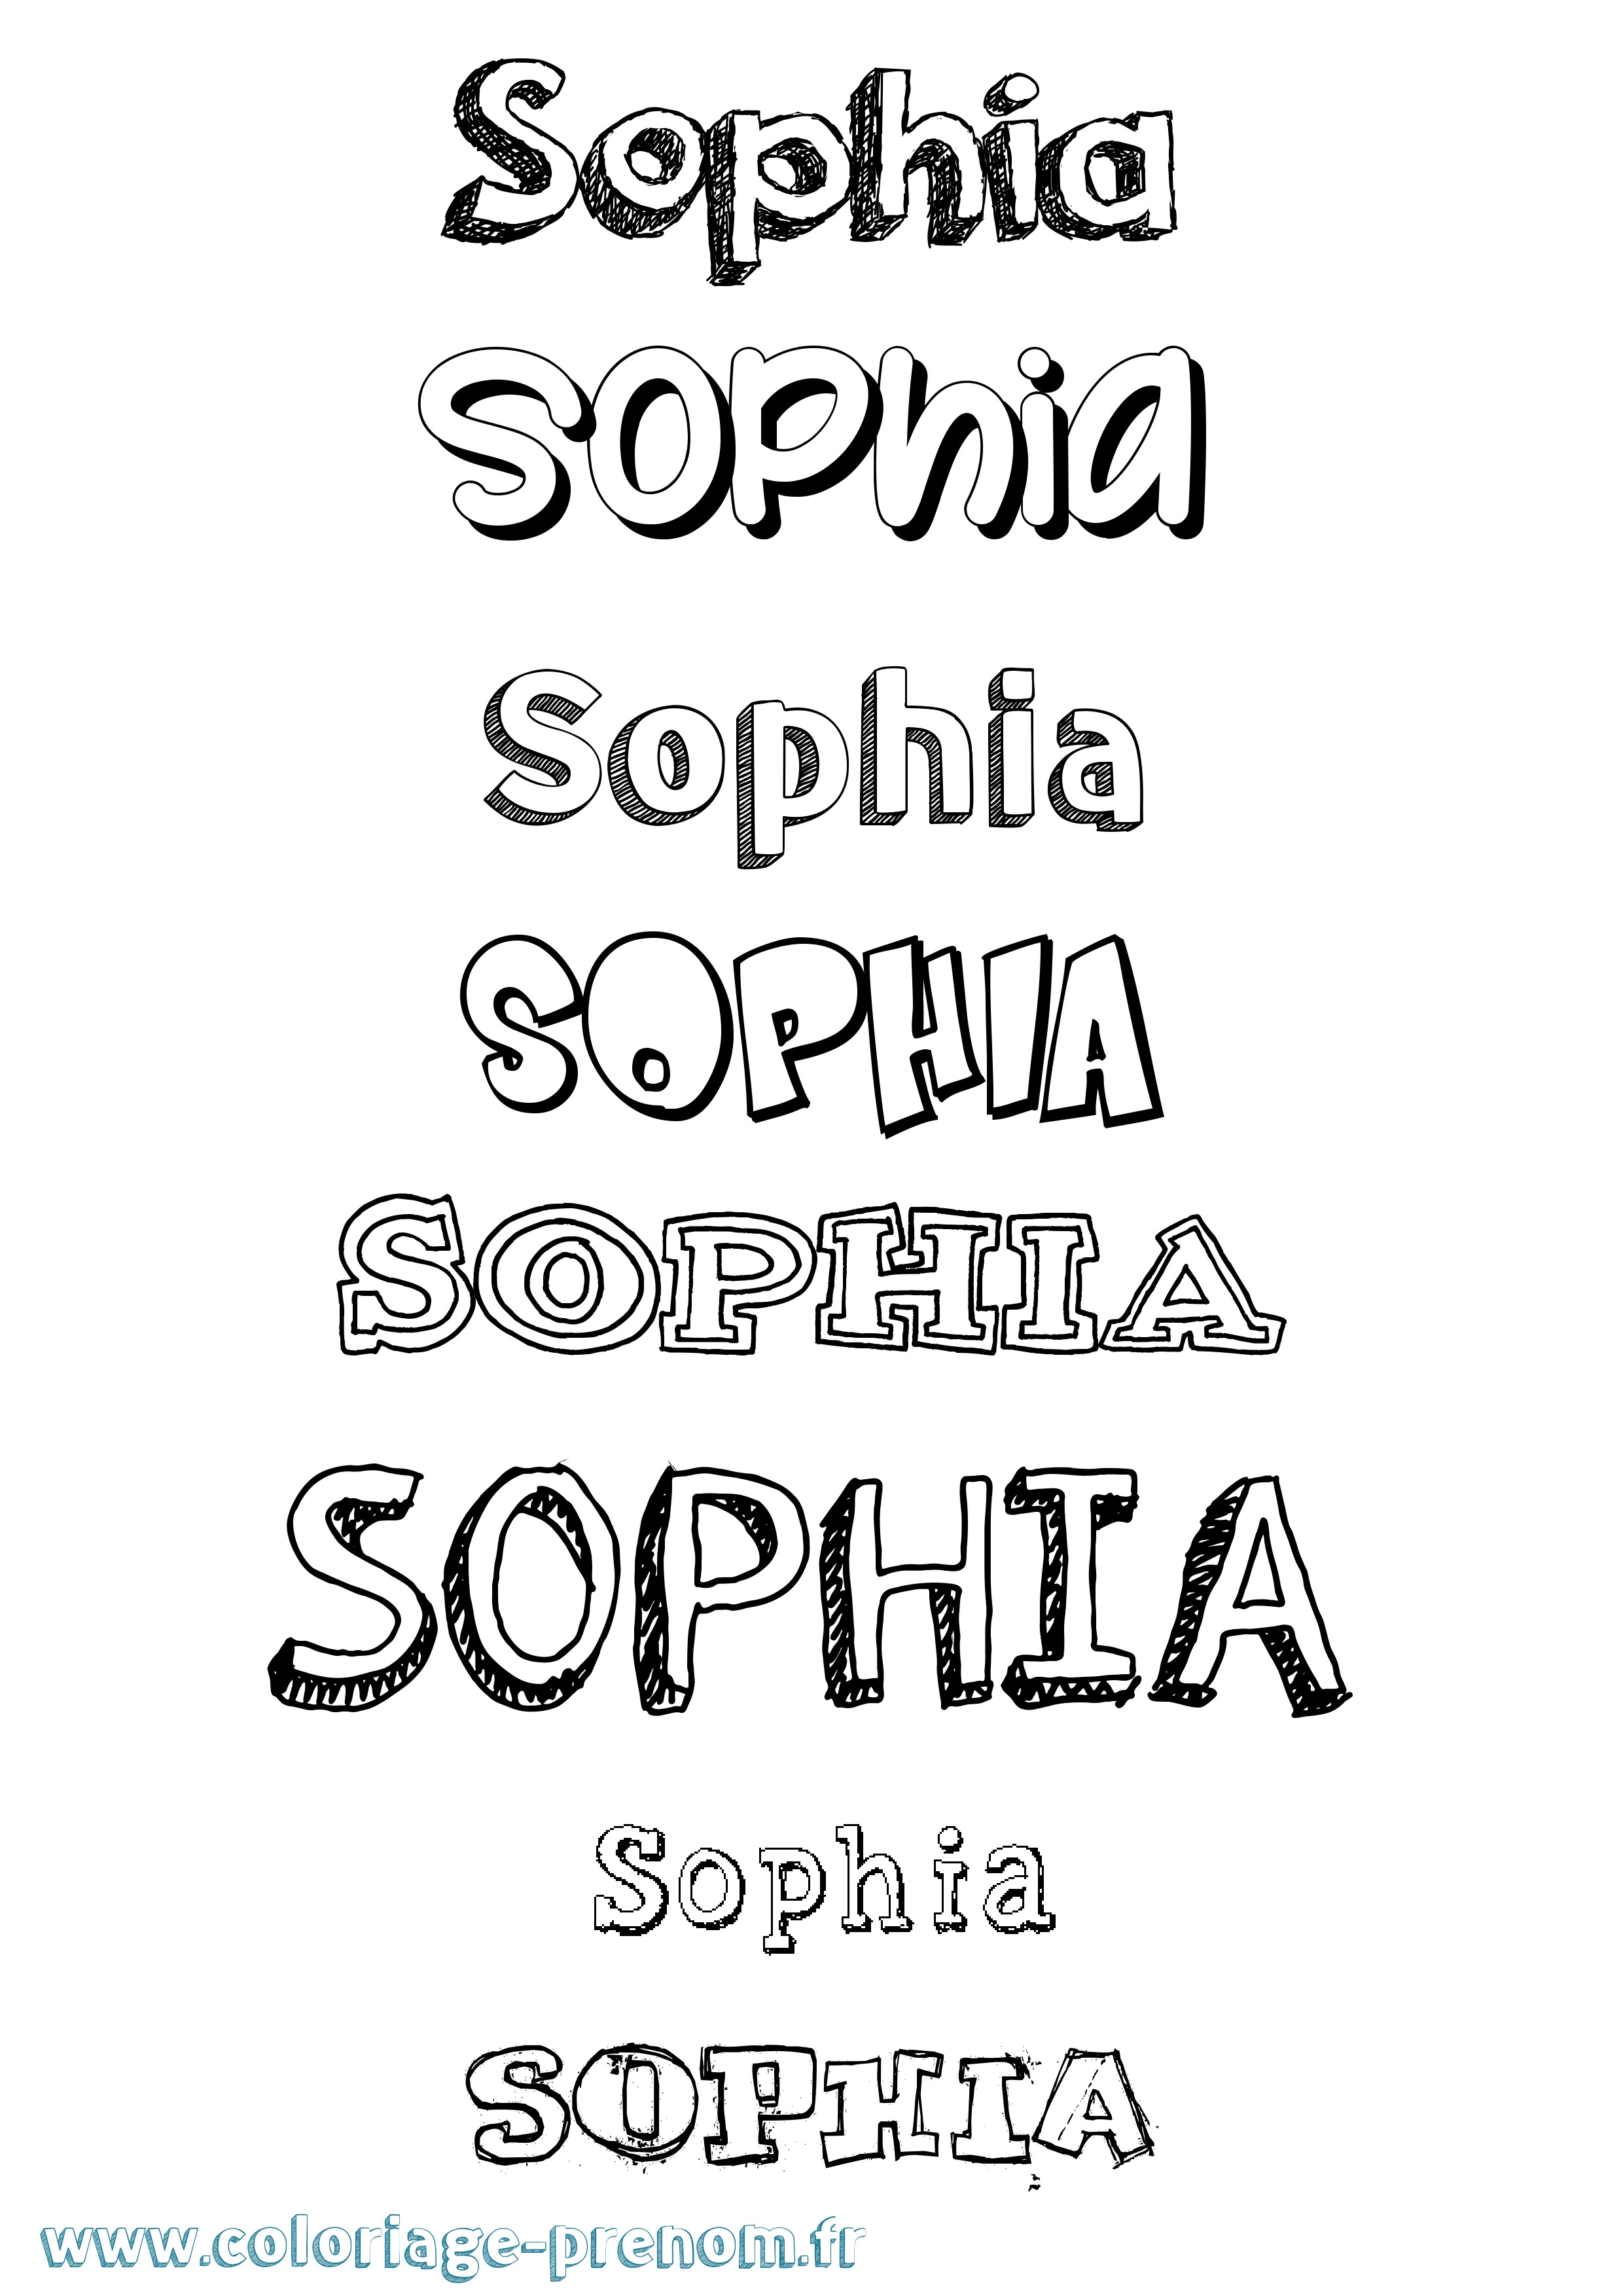 Coloriage prénom Sophia